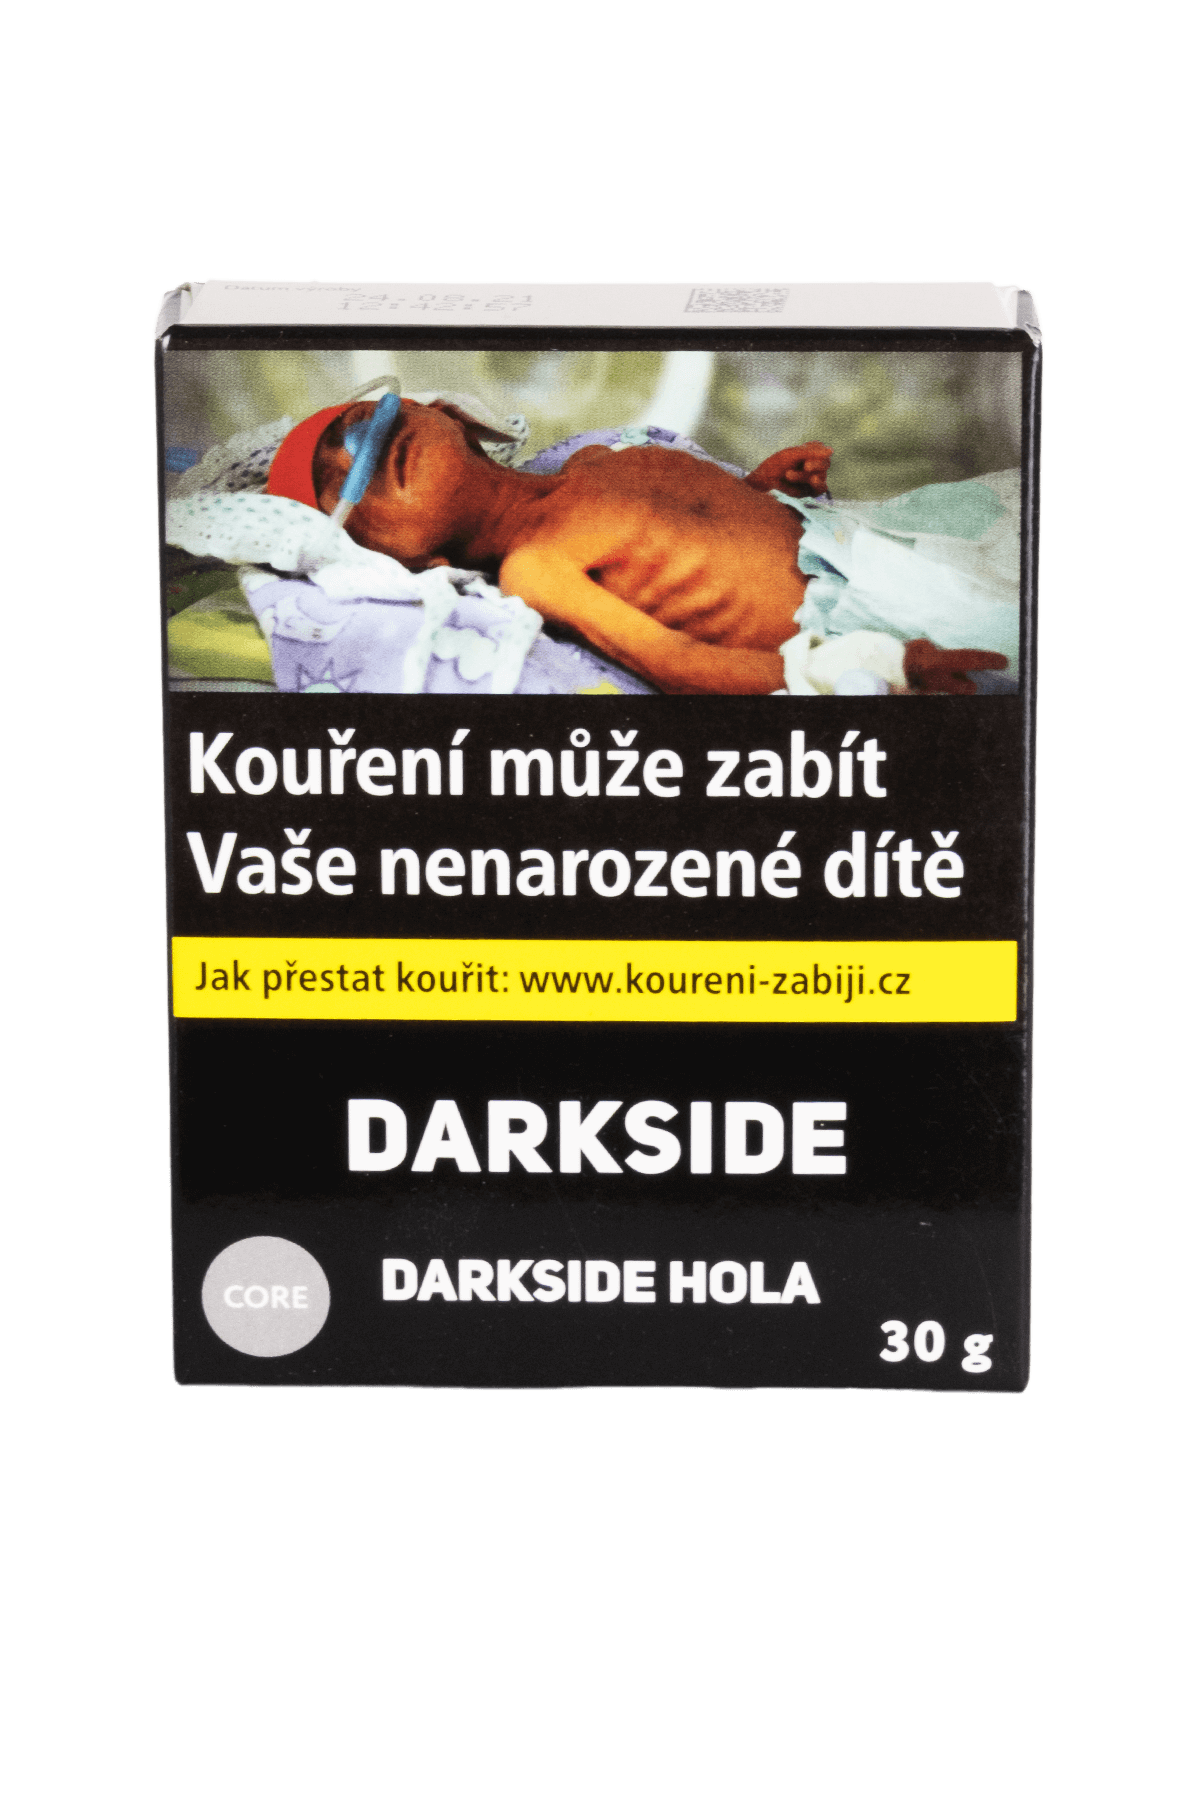 Tobacco - Darkside Core Hola 30g